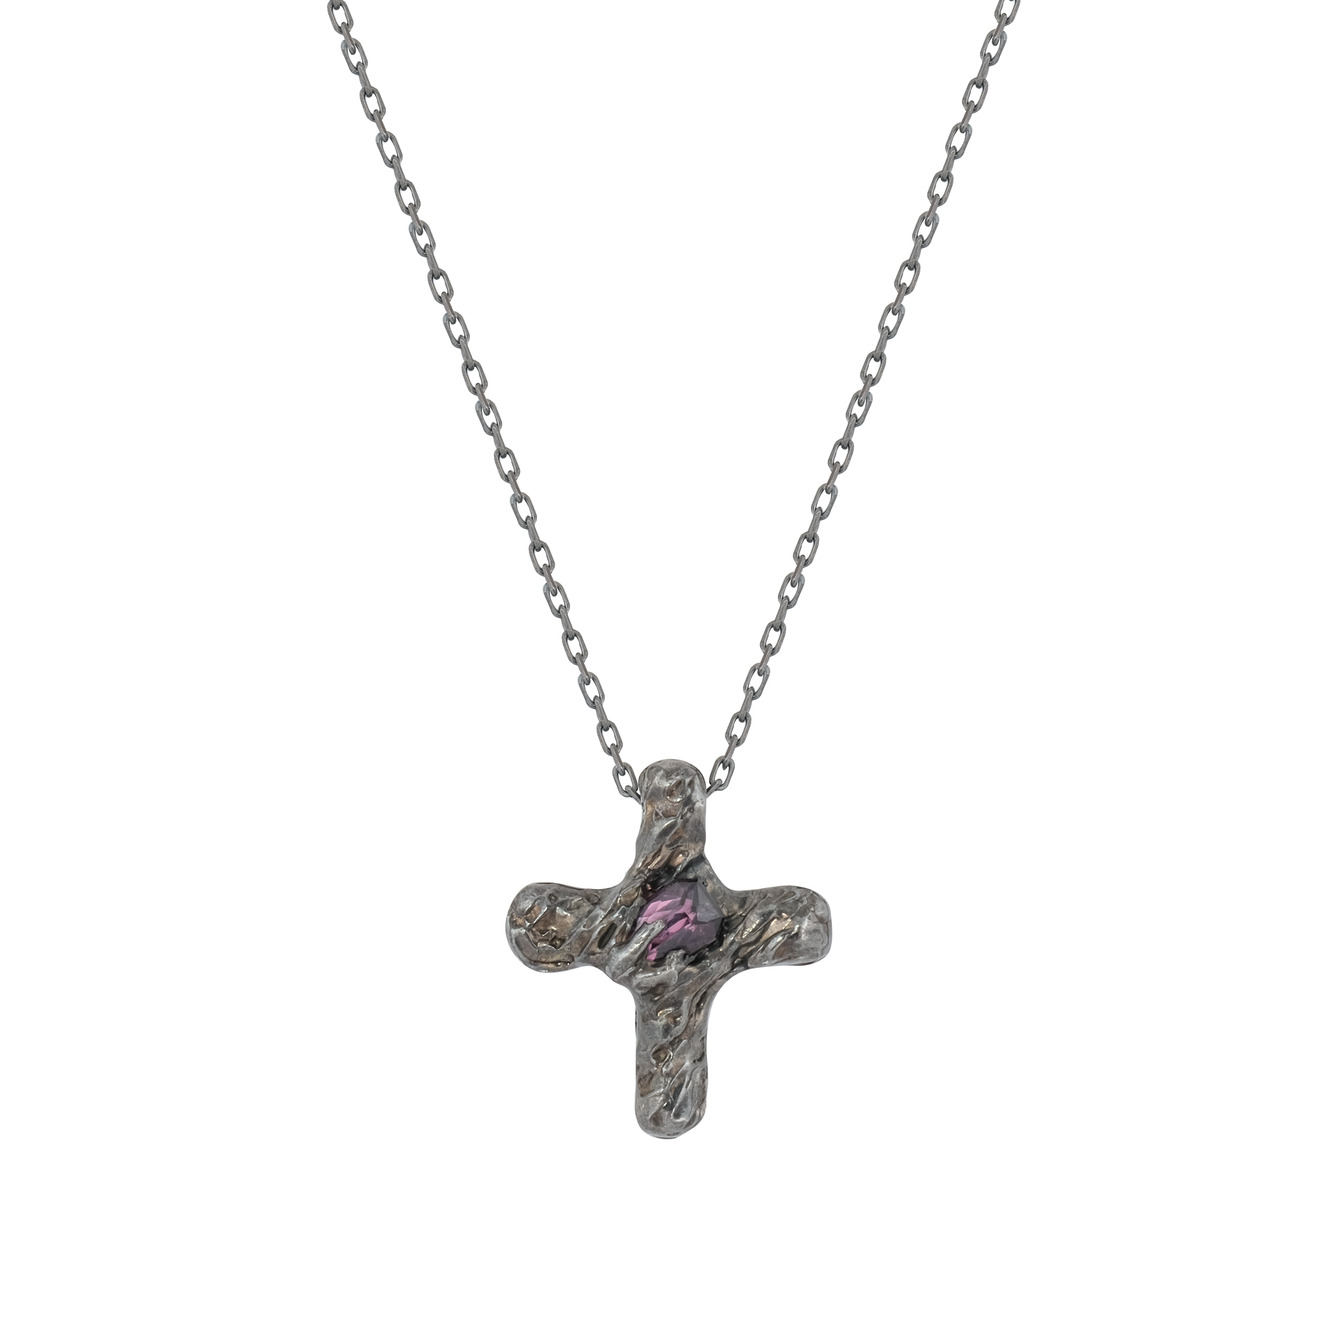 Kintsugi Jewelry Кулон крест из серебра со вставкой из шпинели kintsugi jewelry кольцо из серебра со вставкой из шпинели